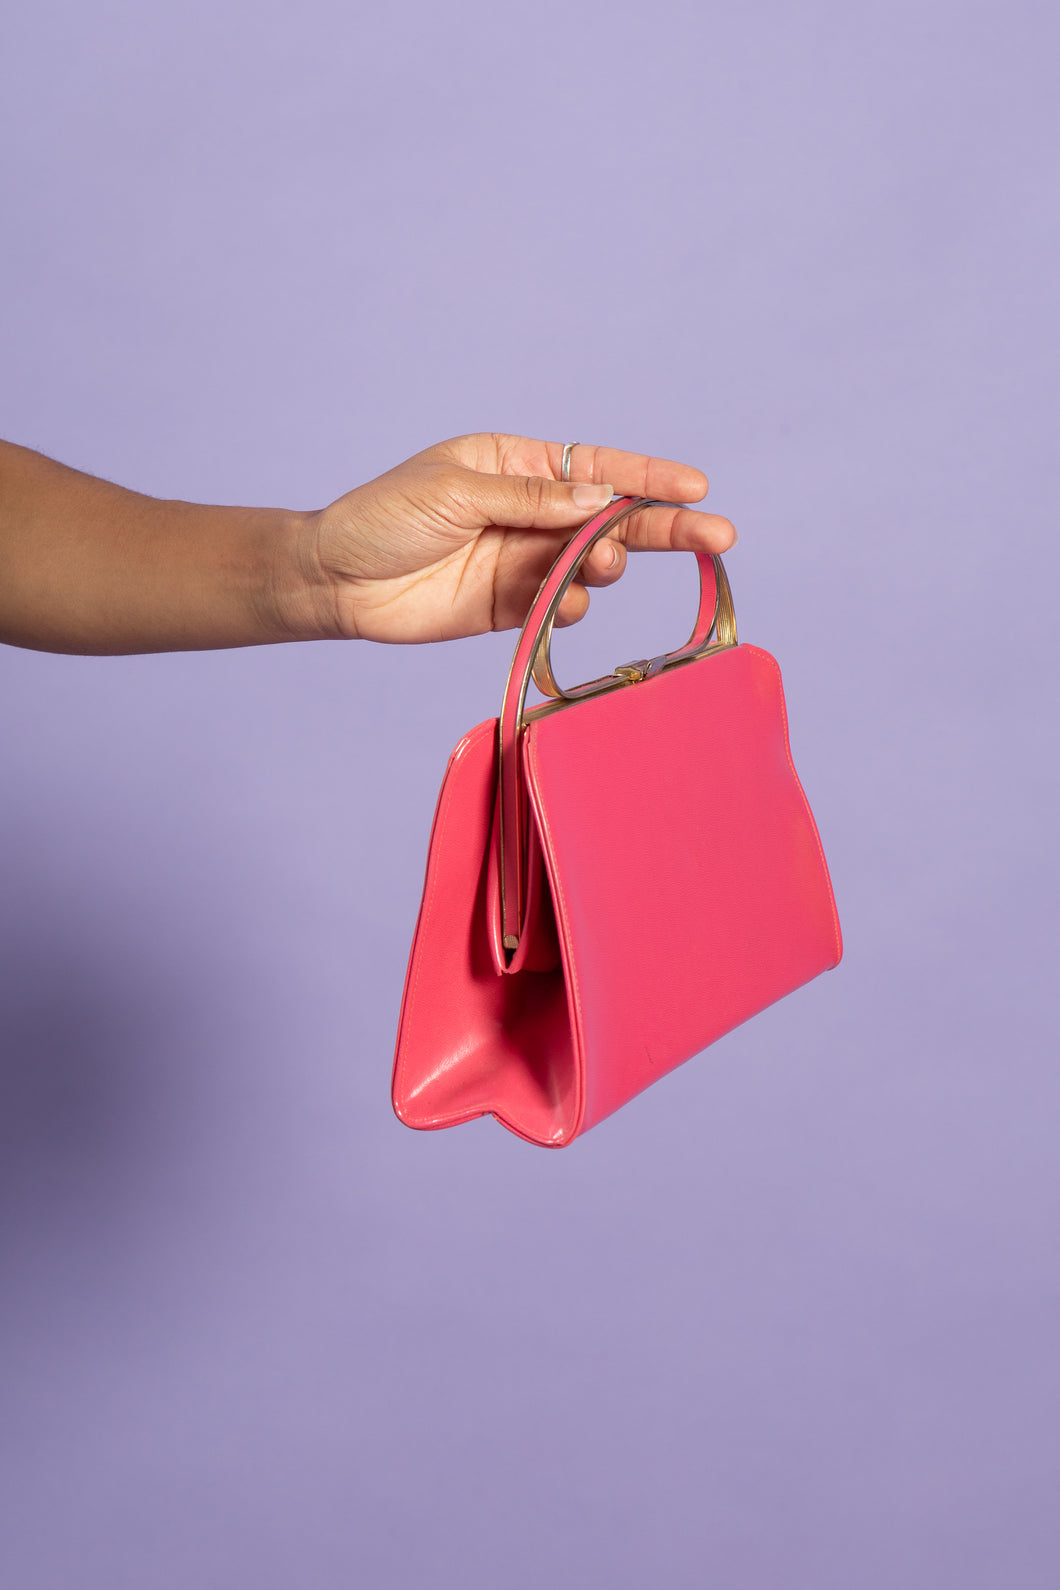 1960s Pink Handbag with Metal Top Handle